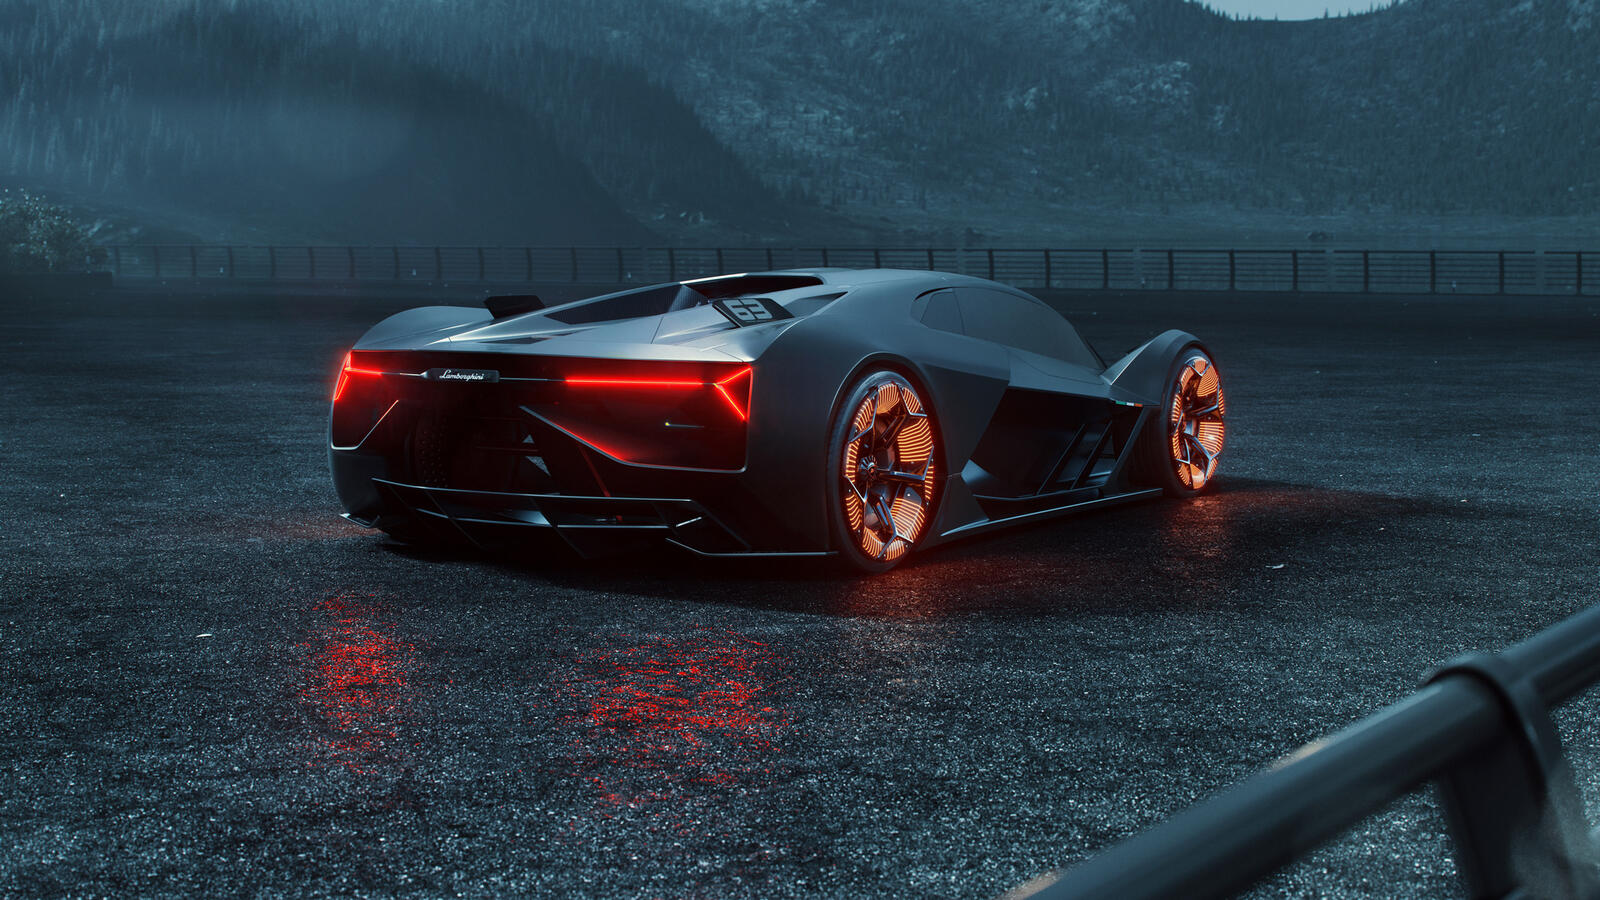 Free photo Black Lamborghini Terzo Millennio with lights on in rainy weather at night